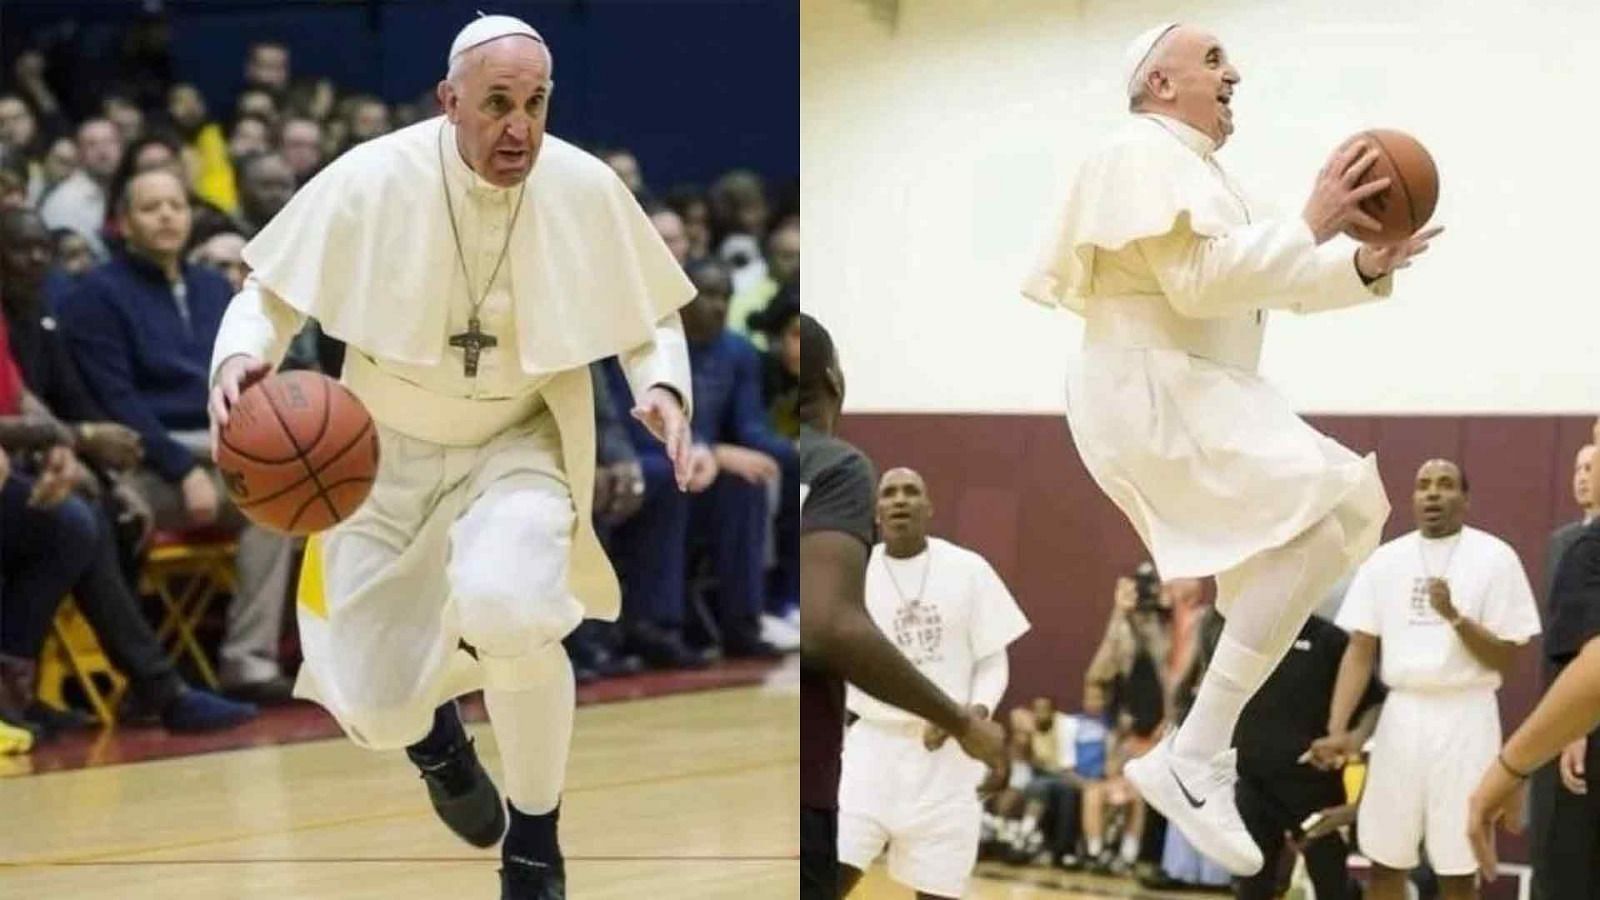 priest playing basketball